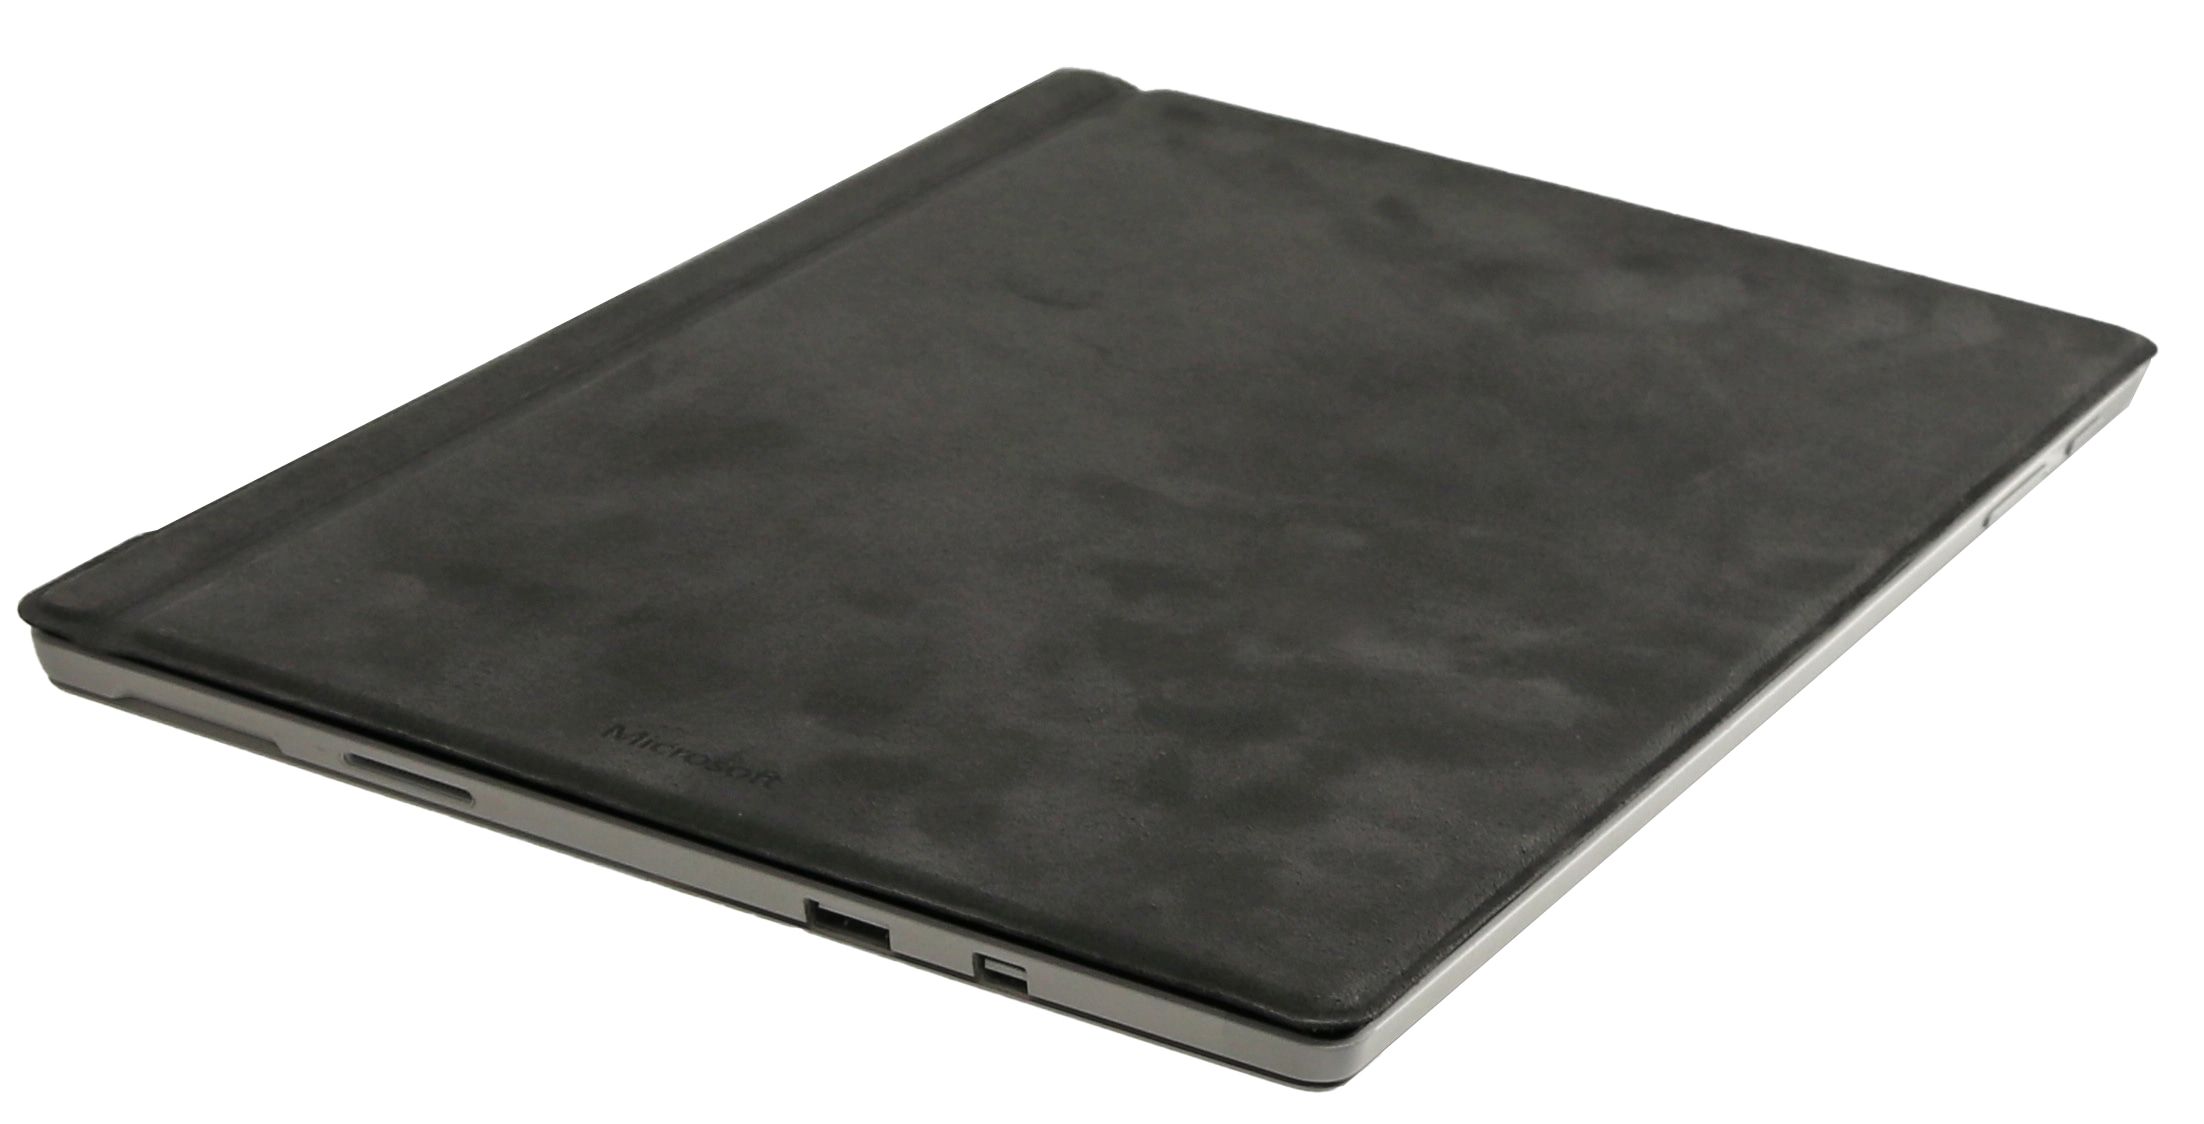 MICROSOFT Notebook Surface Pro 5, Intel i5, 128GB SSD, gebraucht